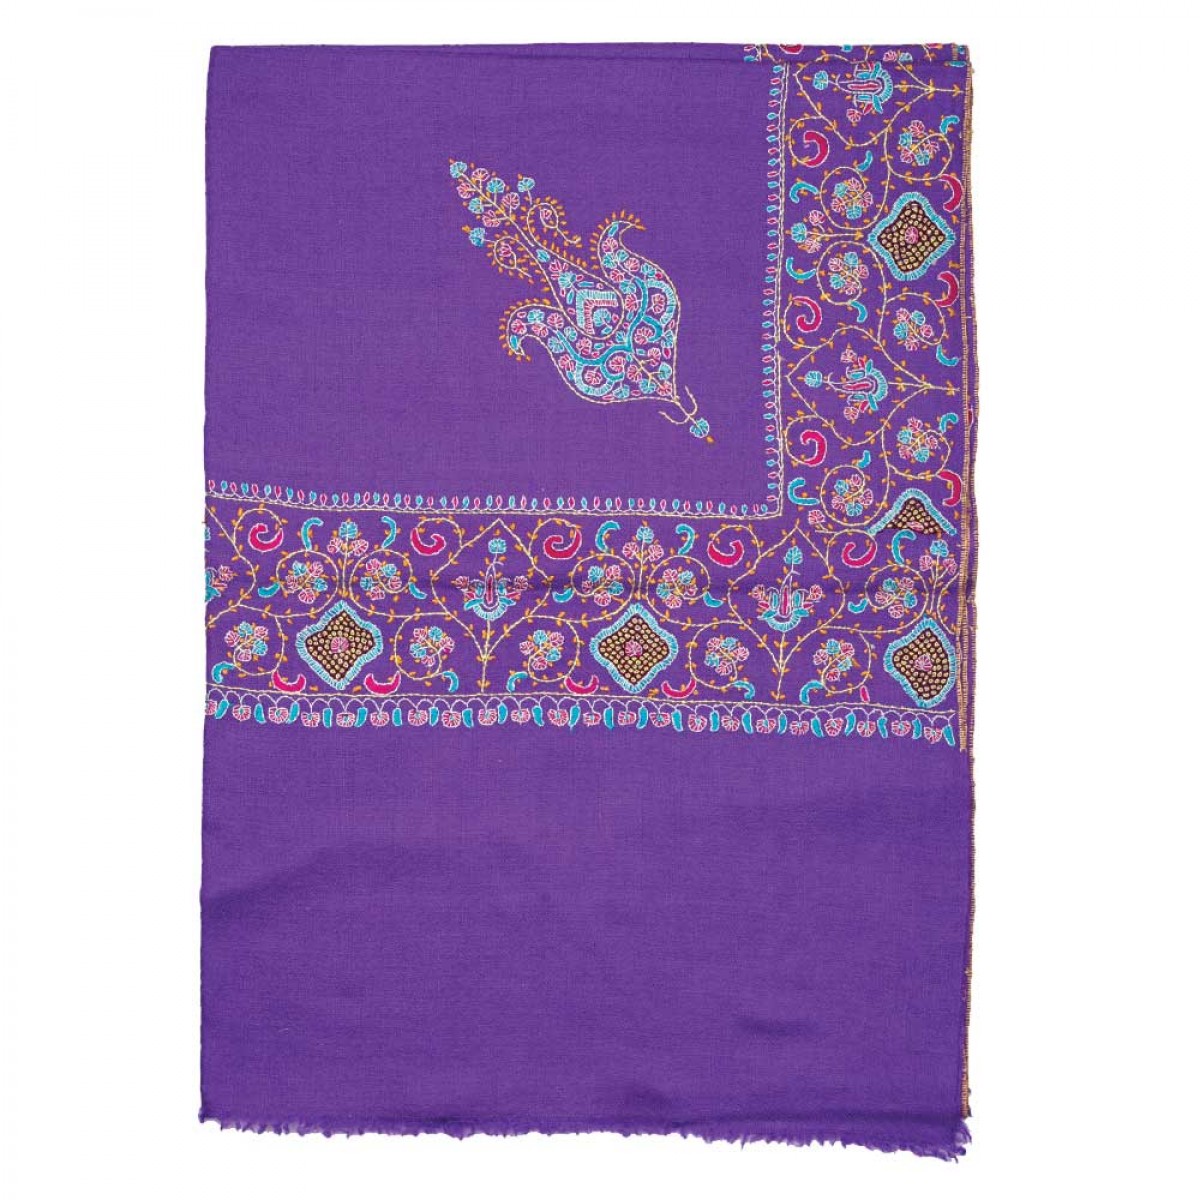 Embroidered Pashmina Stole - Purple